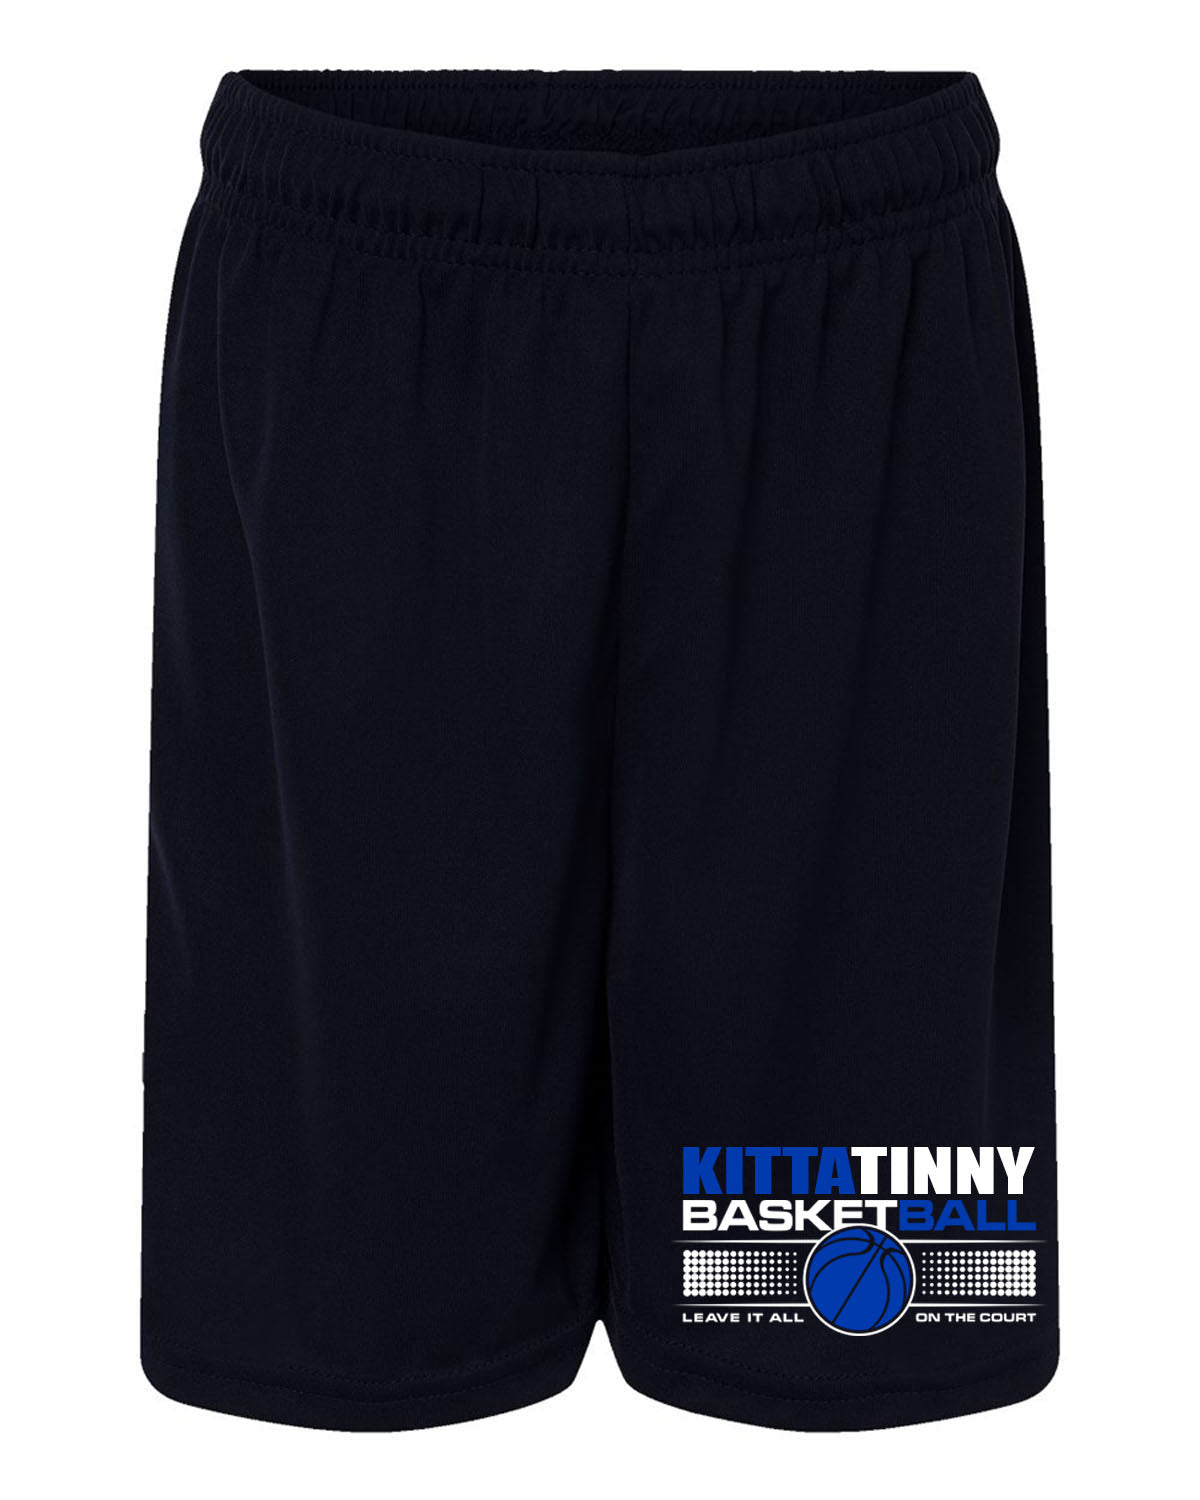 Kittatinny Basketball  Performance Shorts Design 1